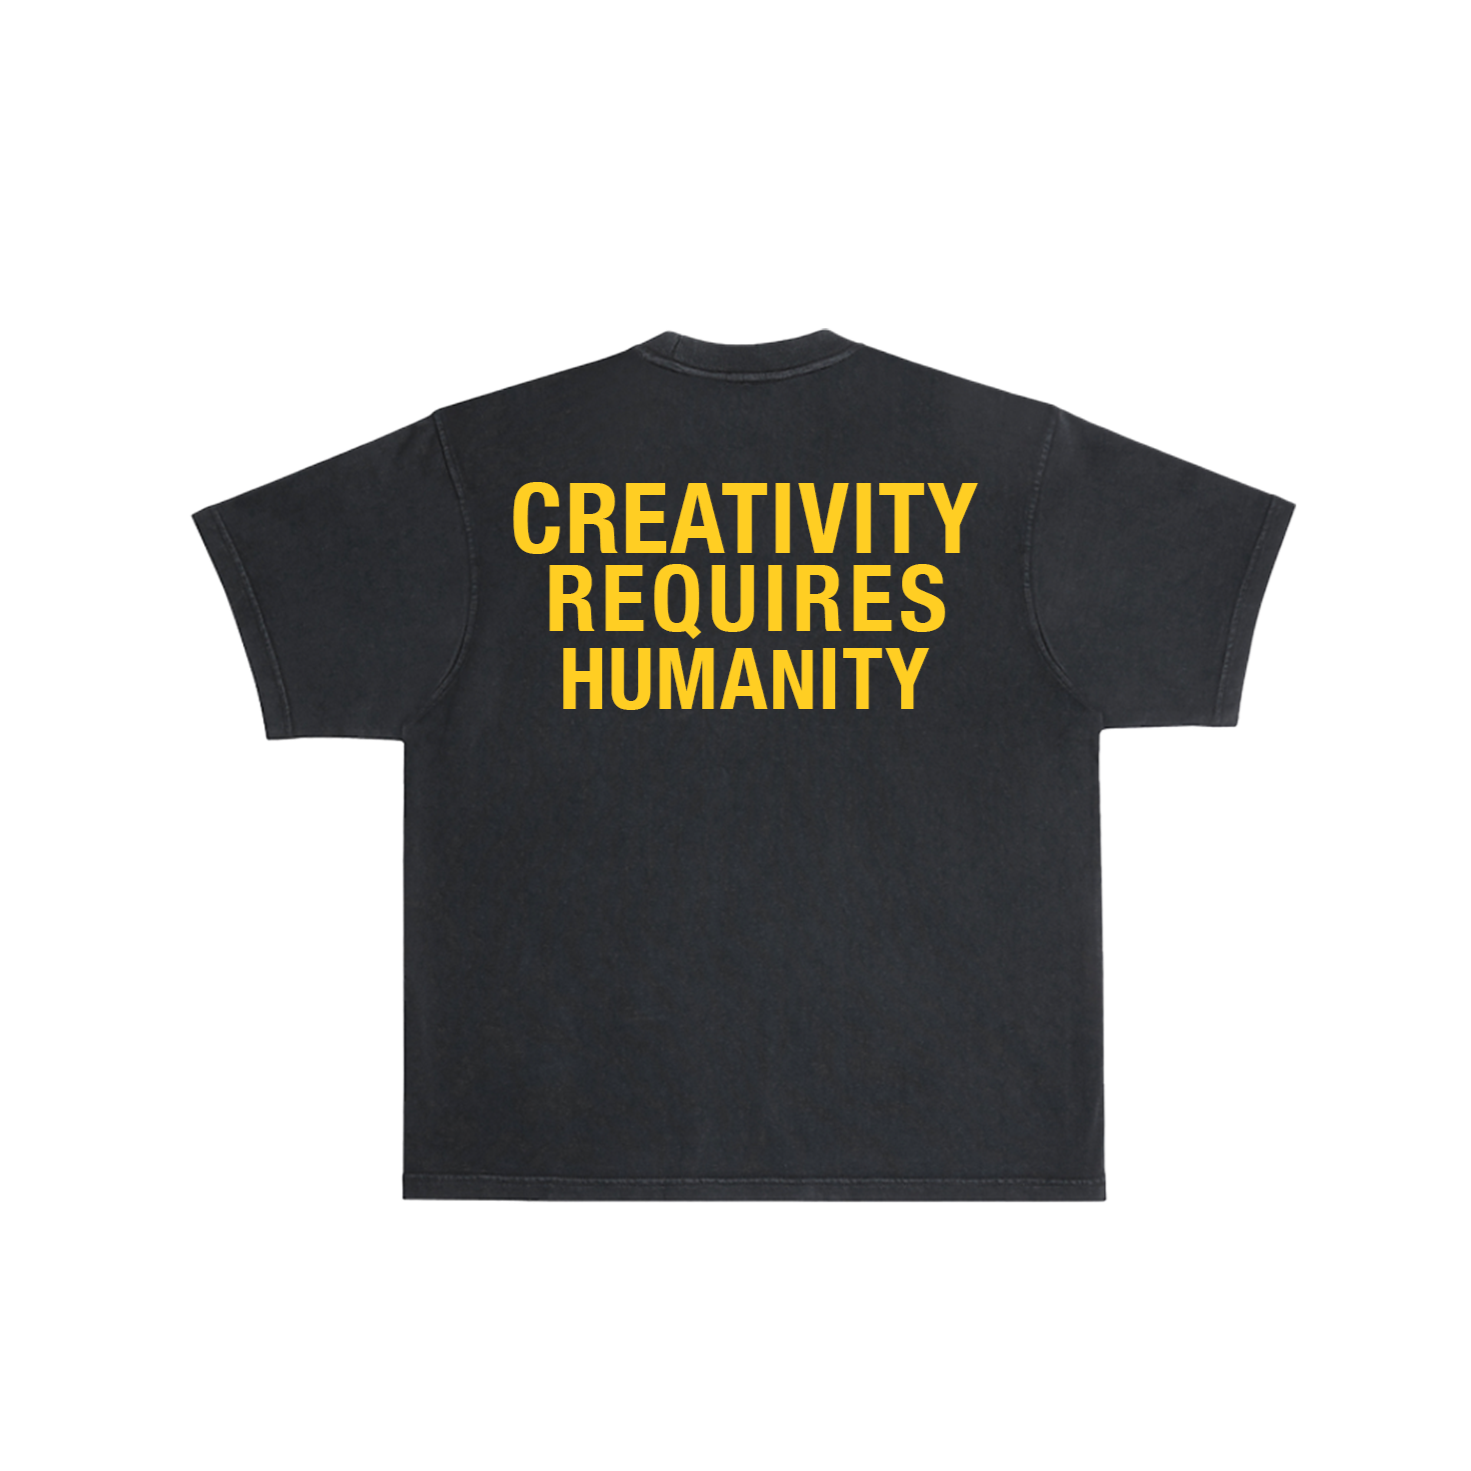 "CREATIVITY REQUIRES HUMANITY" T-Shirt (Black + Yellow)